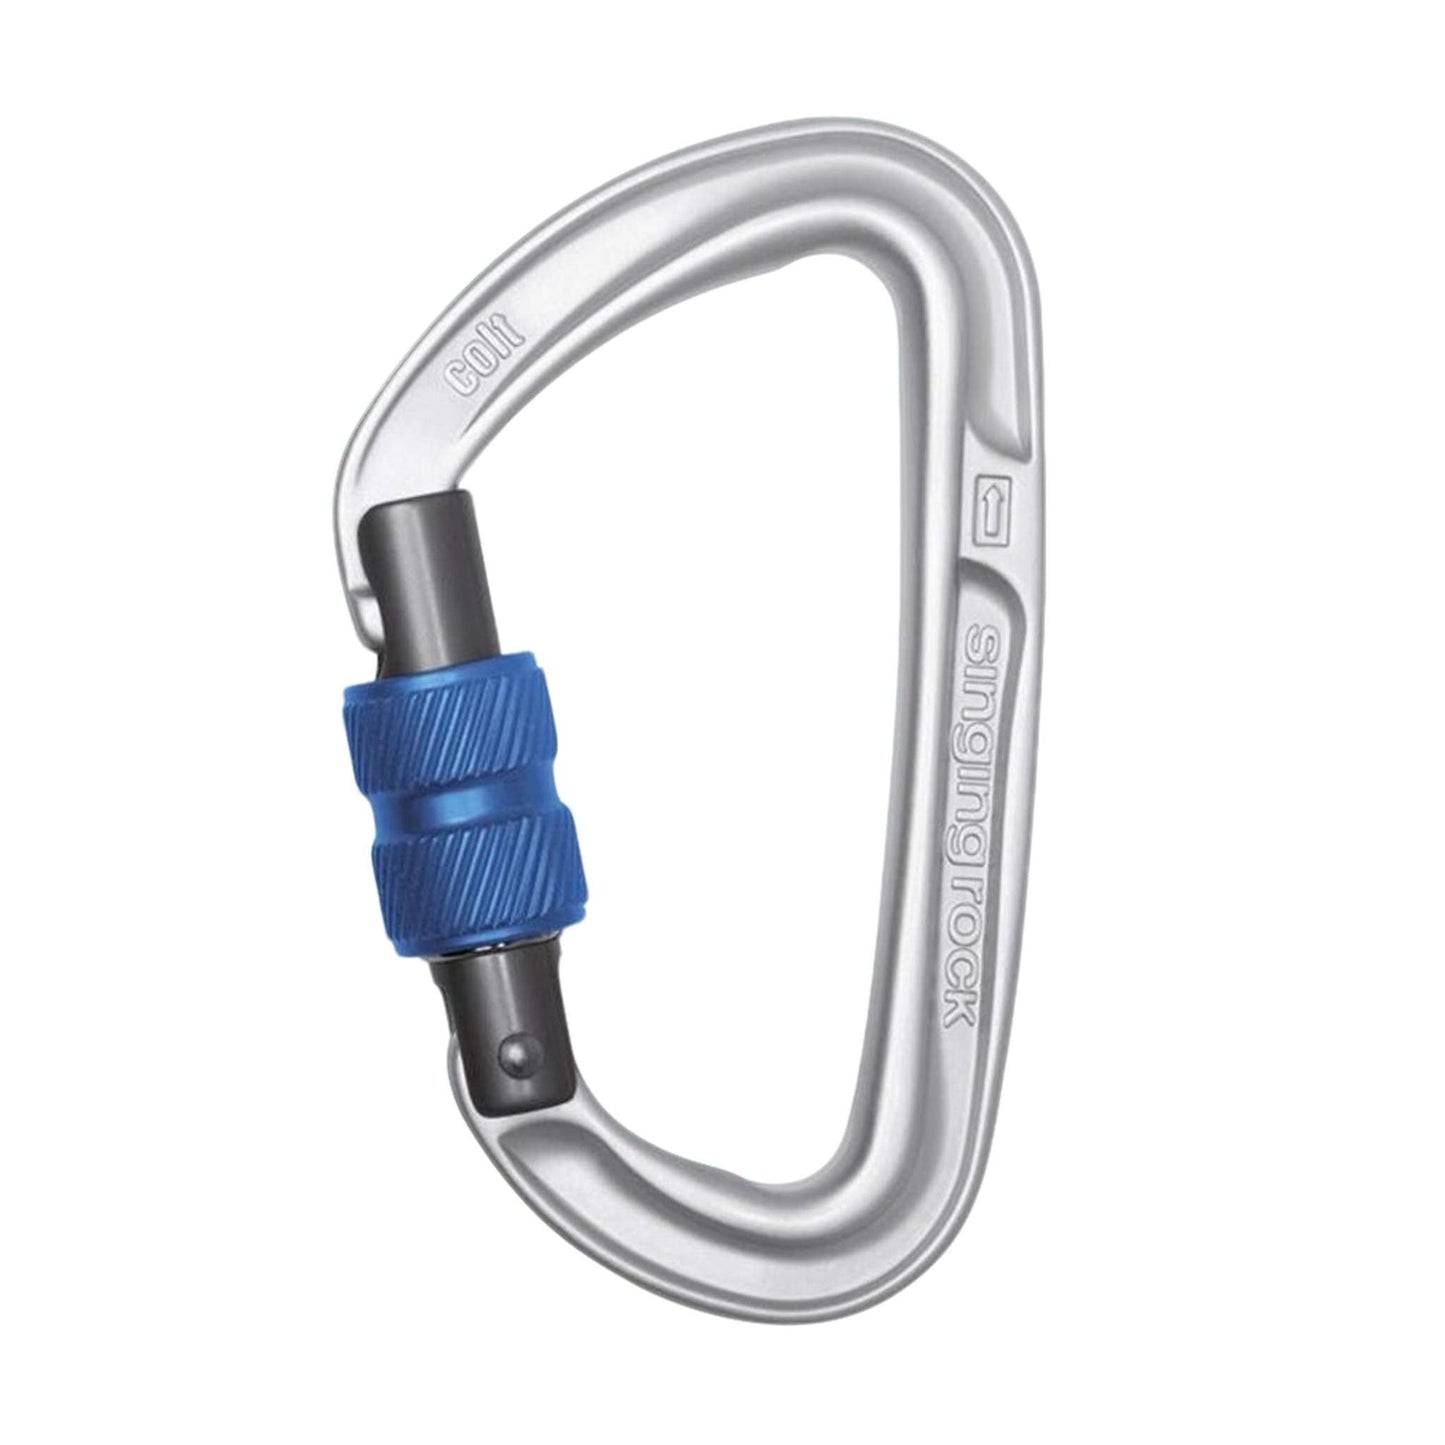 Colt Locking Carabiner Screwgate 3-Pack - Ultimate Climbing Safety Bundle